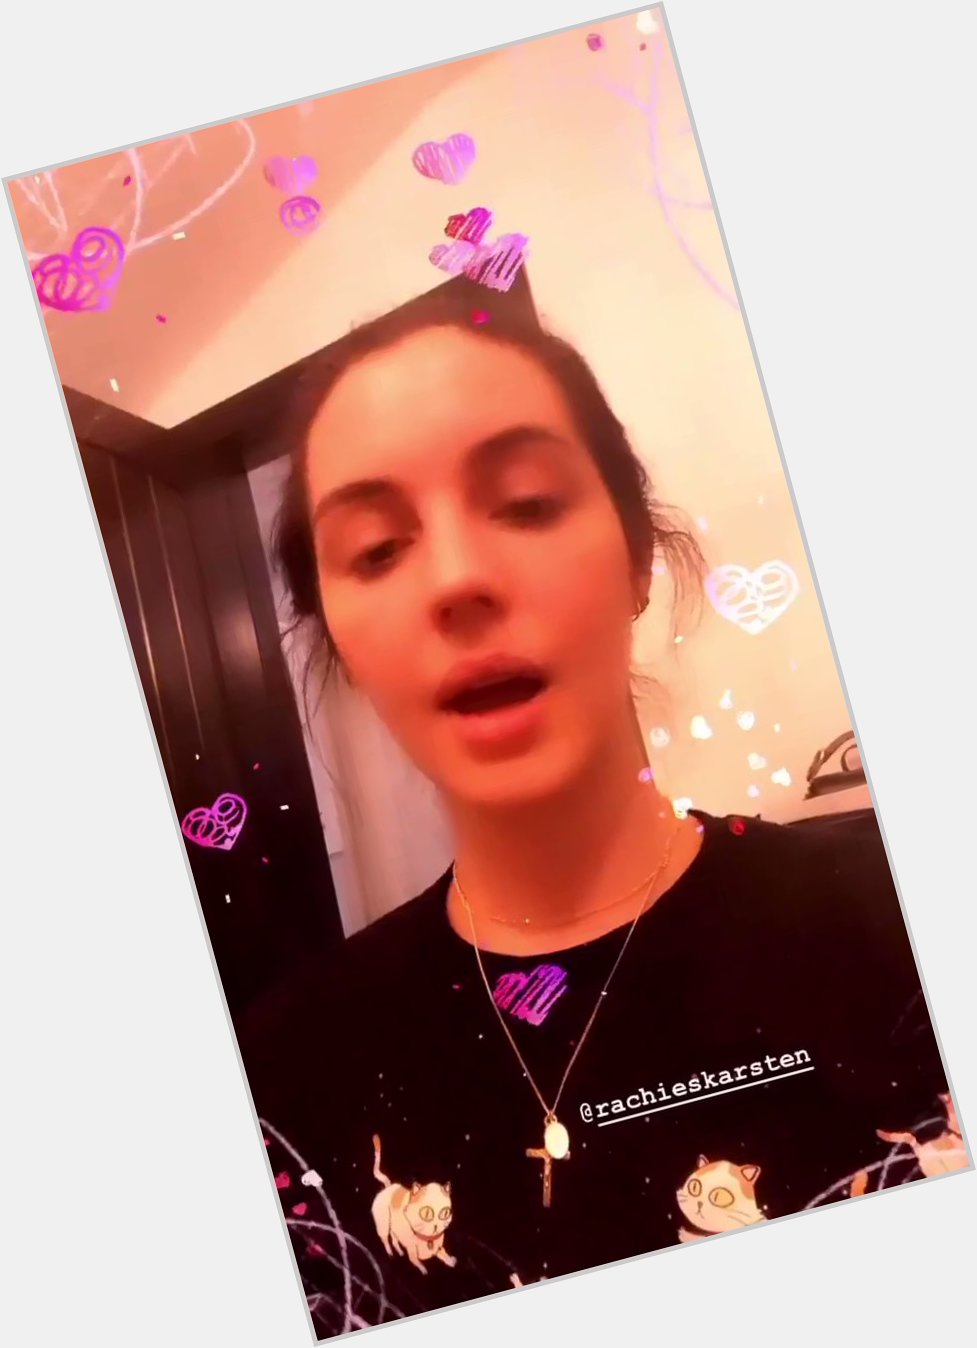 Adelaide via Instagram story, singing Happy Birthday for her best friend Rachel Skarsten. 